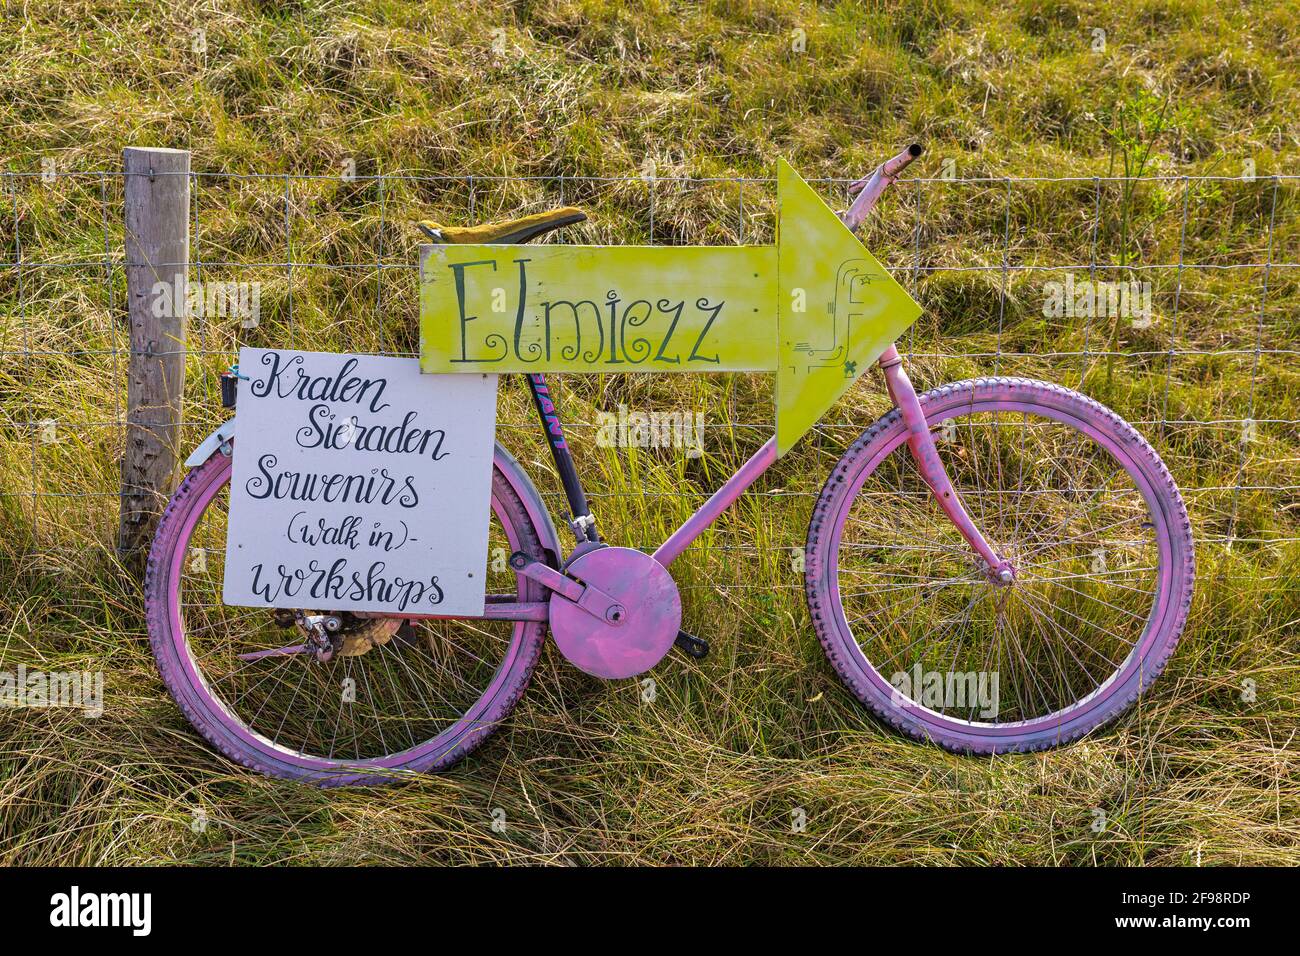 Fahrrad, Wegweiser, lokaler Dekoladen auf Texel Stockfotografie - Alamy